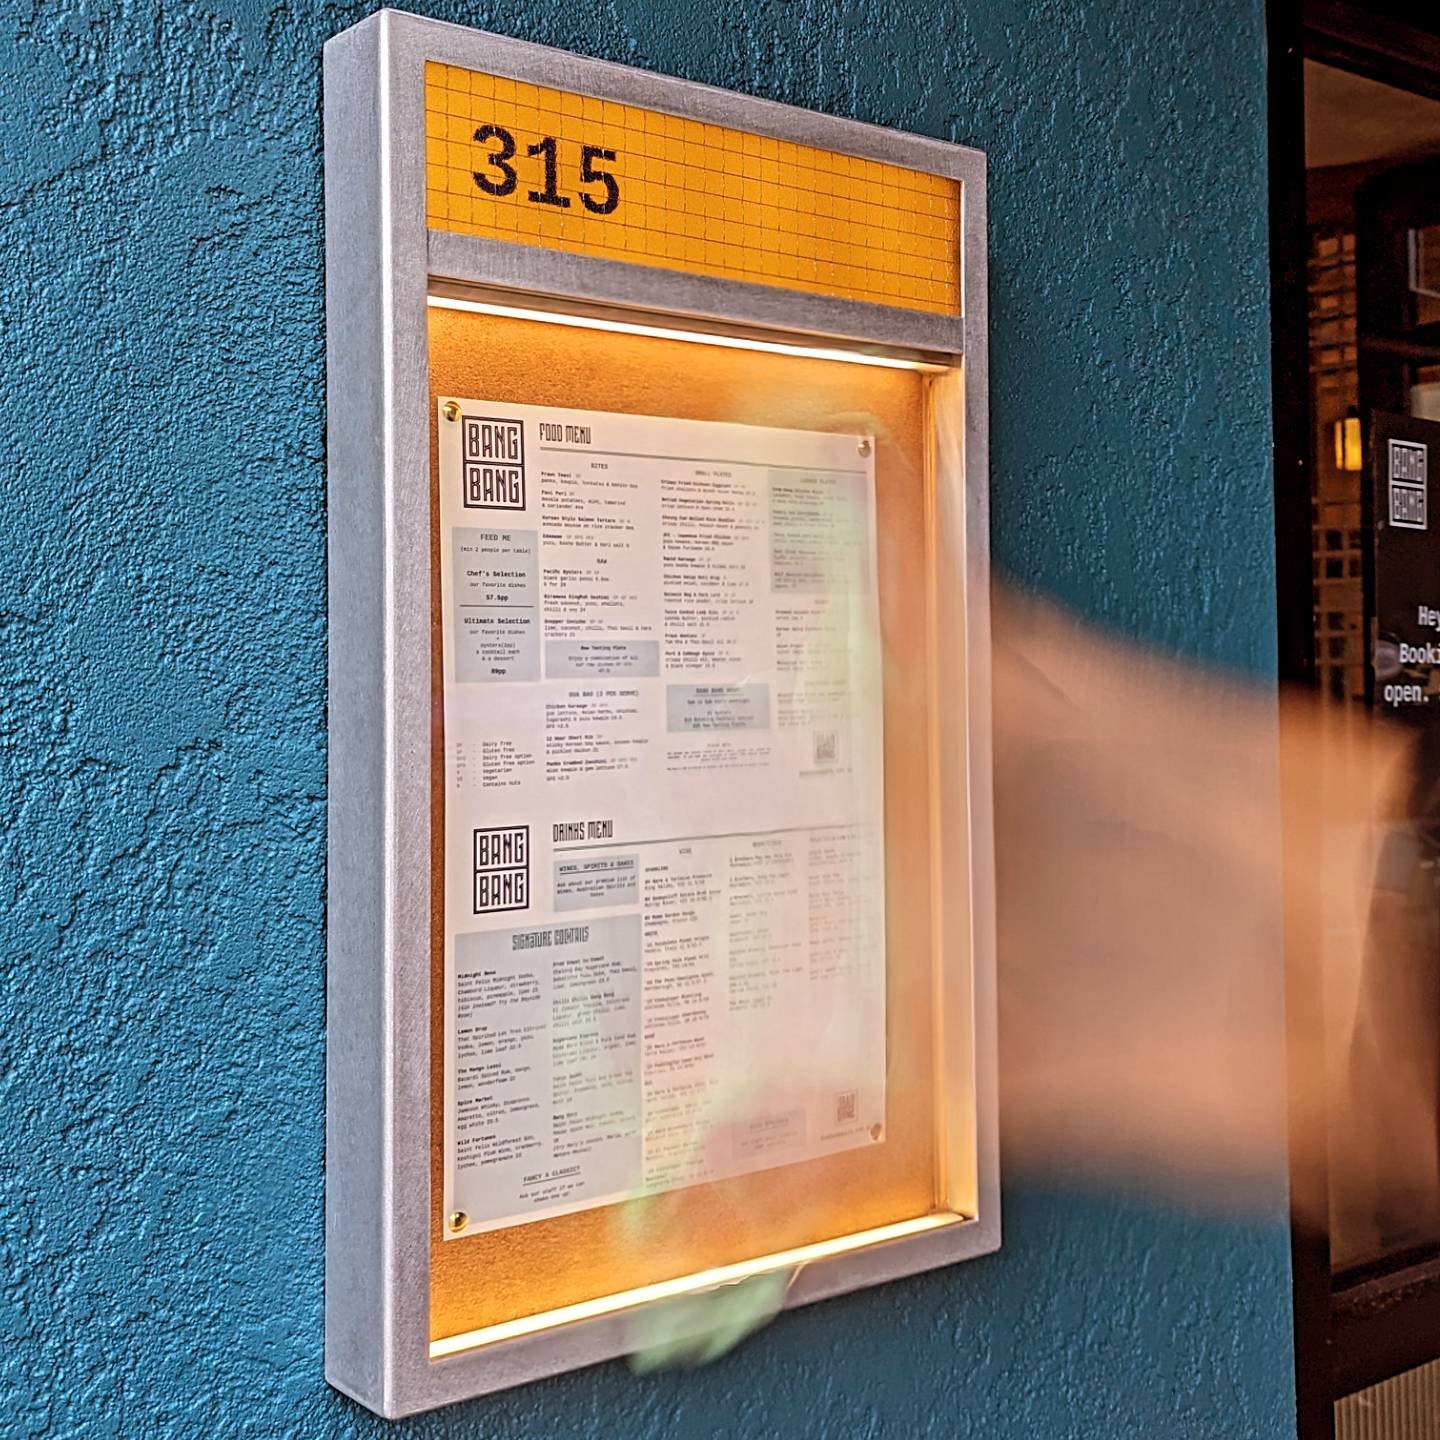 Menu box for @bangbanghampton 's beautiful new restaurant, curated by @eleishagray 

#menubox #menu #menusign #illuminated
#illuminatedsigns #lightbox #display #menudisplay #sign #signs #signmaking #aluminium #safetyglass #meshglass
#fabrication #fab